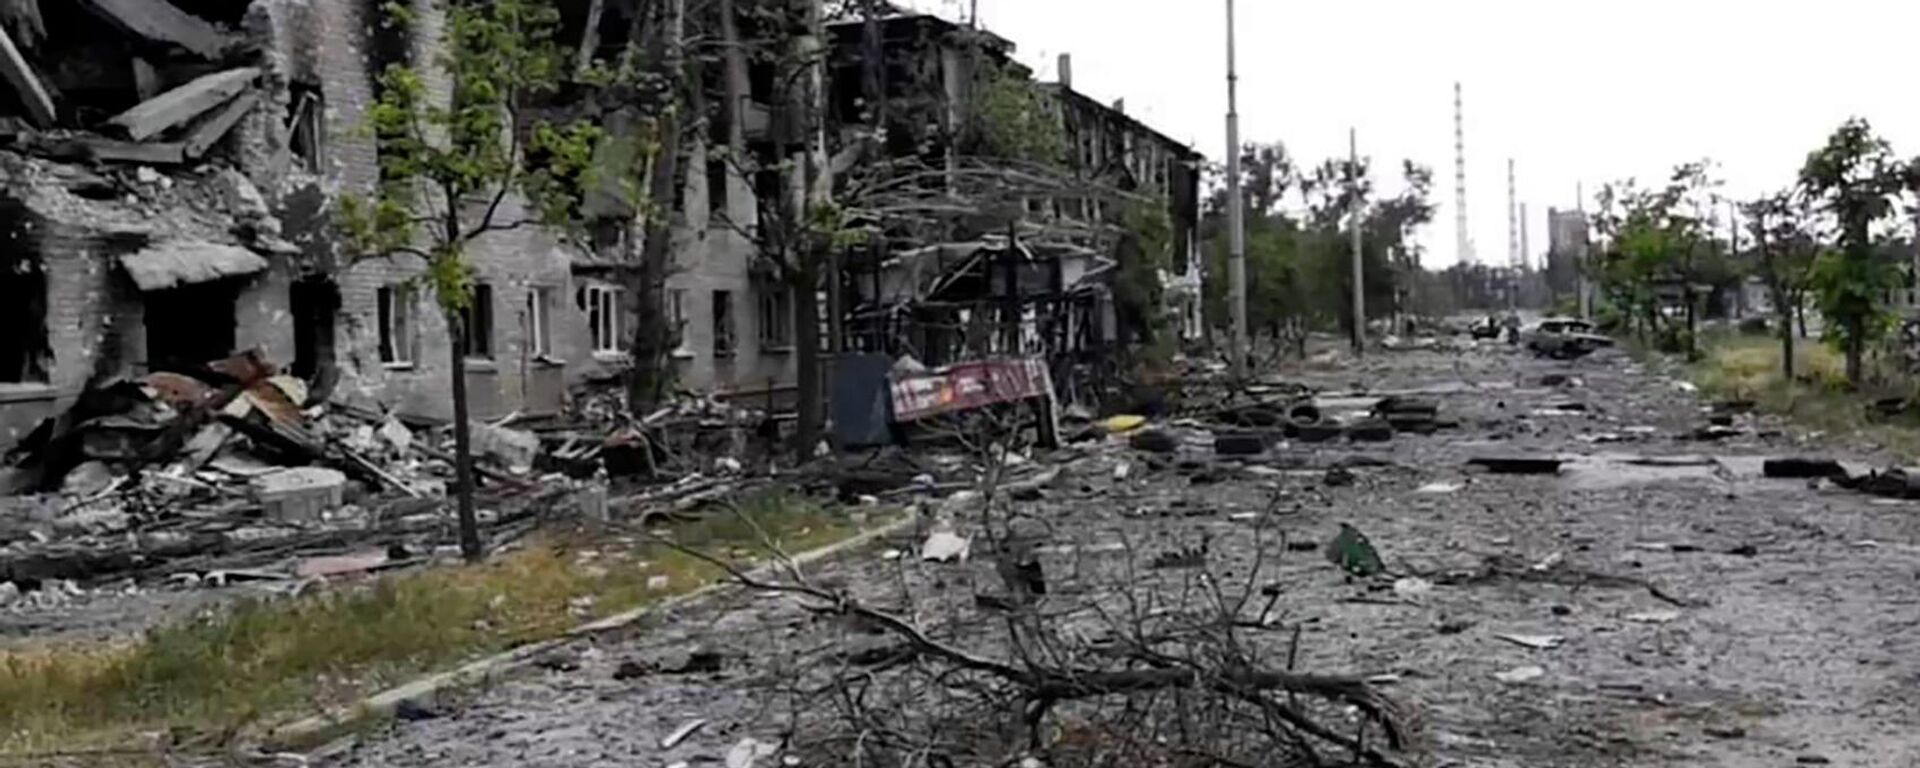 Imagem mostra edifícios danificados em Lysychansk, em Lugansk - Sputnik Brasil, 1920, 09.07.2022